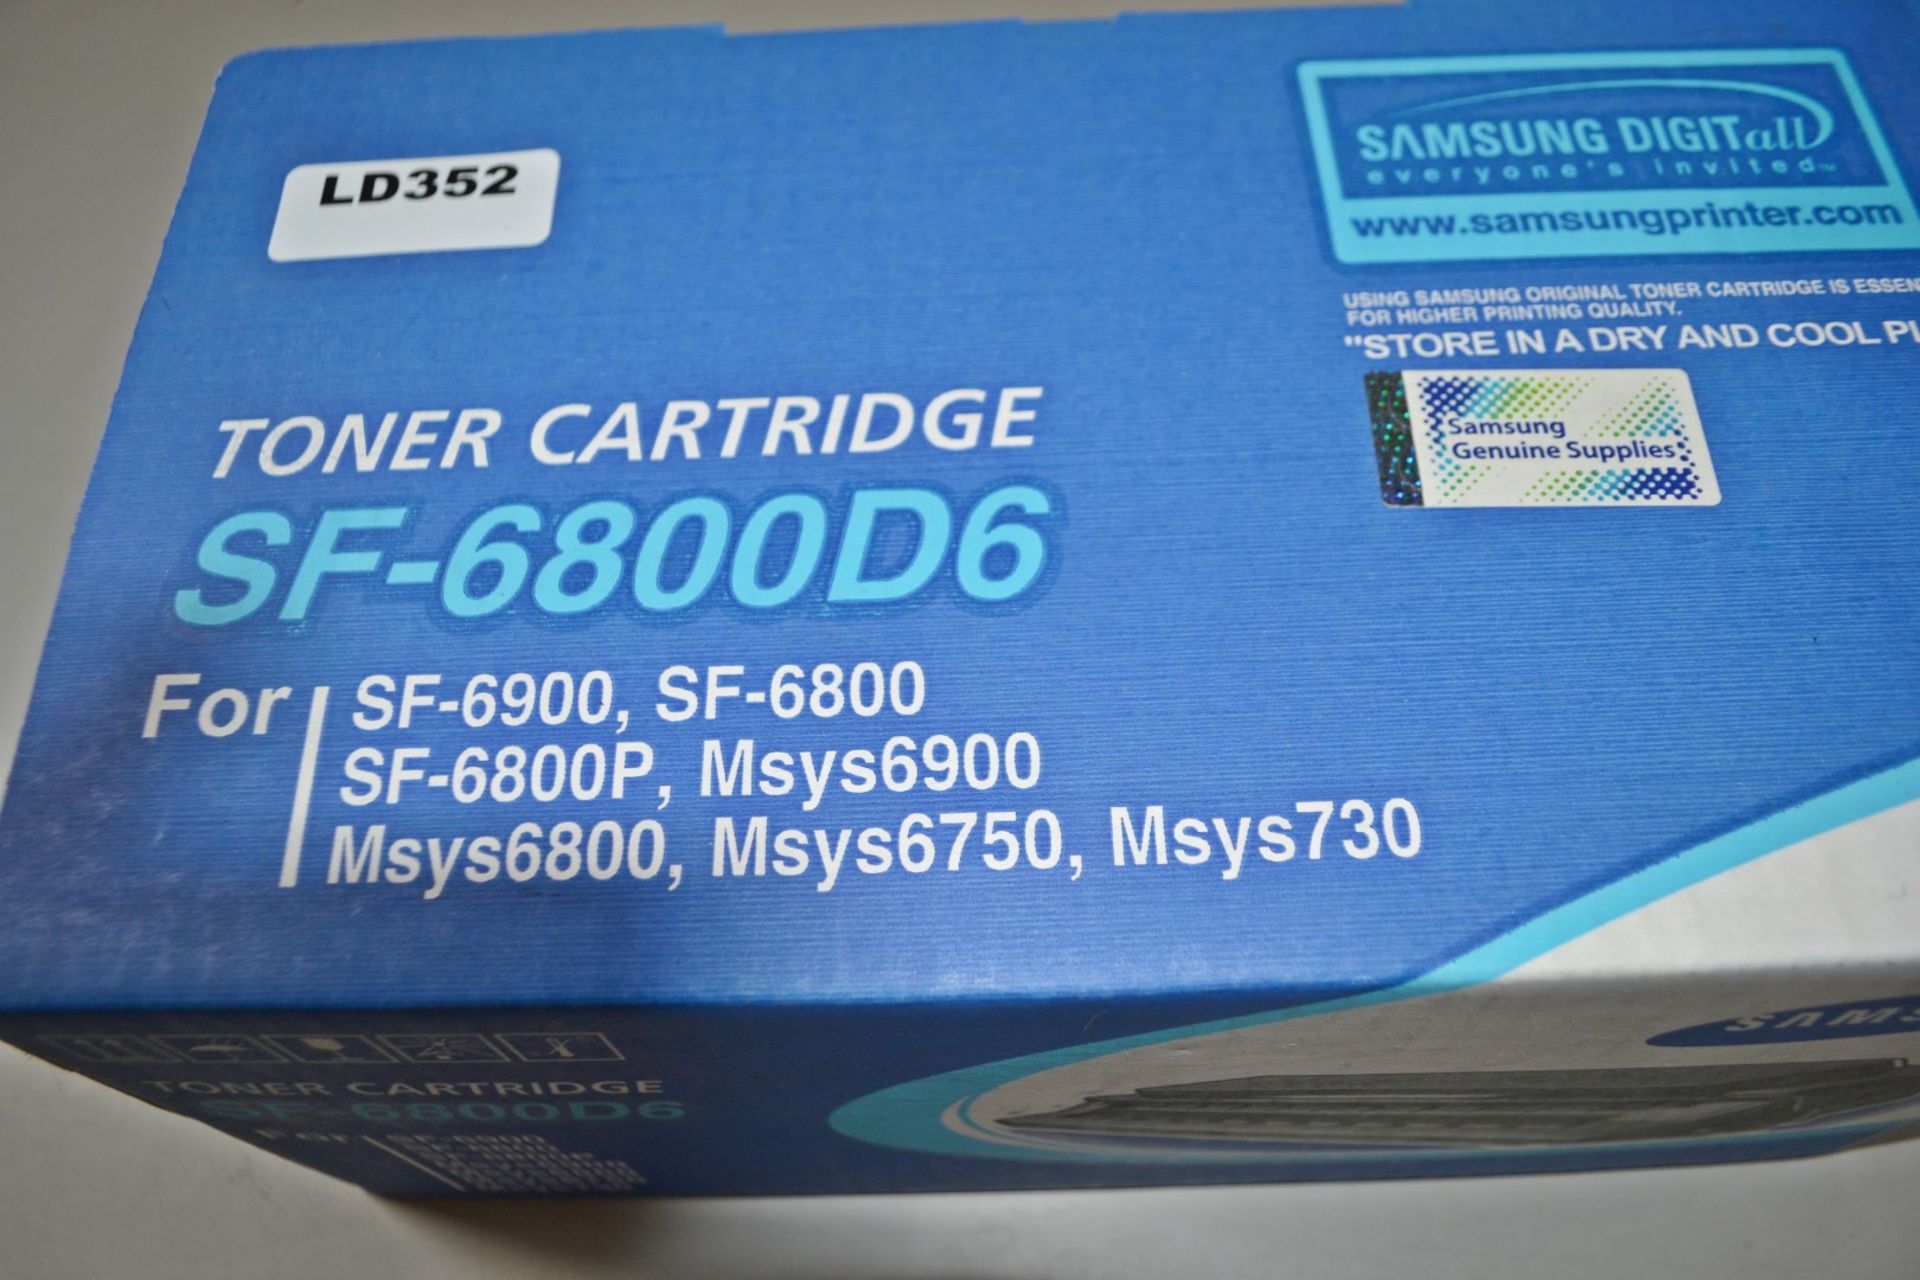 1 x New Samsung Toner Cartridge SF-6800D6 - Ref: LD352 - CL409 - Altrincham WA14 - Image 4 of 4